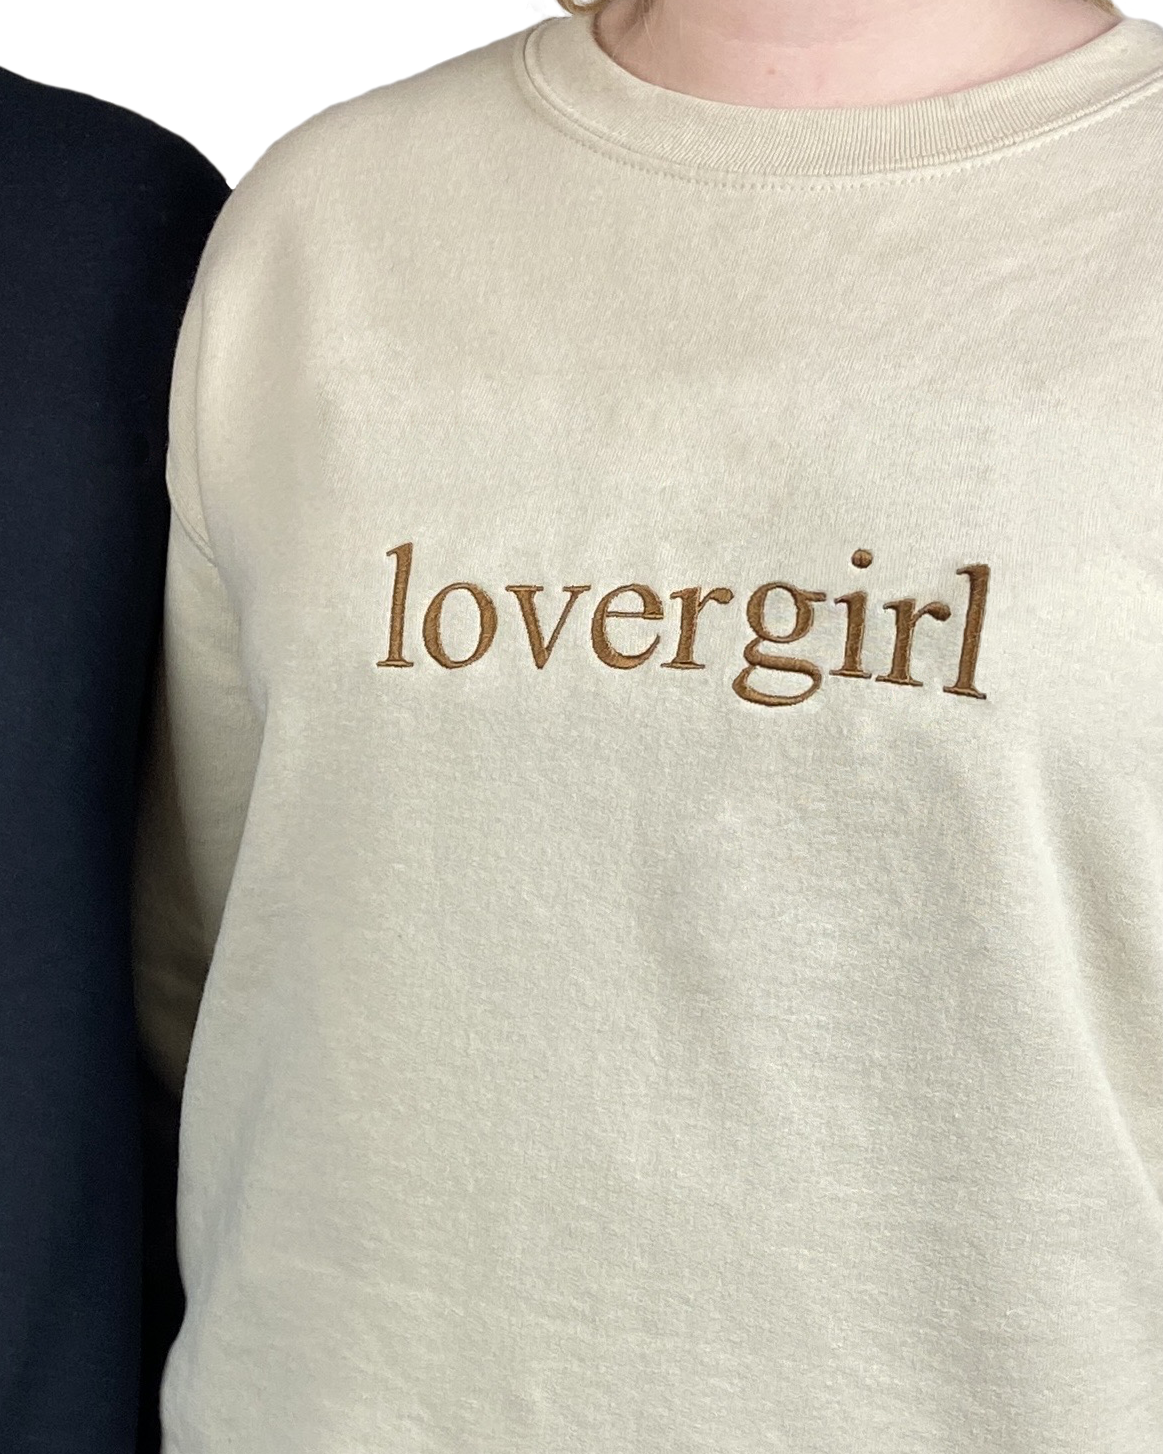 Loverboy / Lovergirl Matching Set